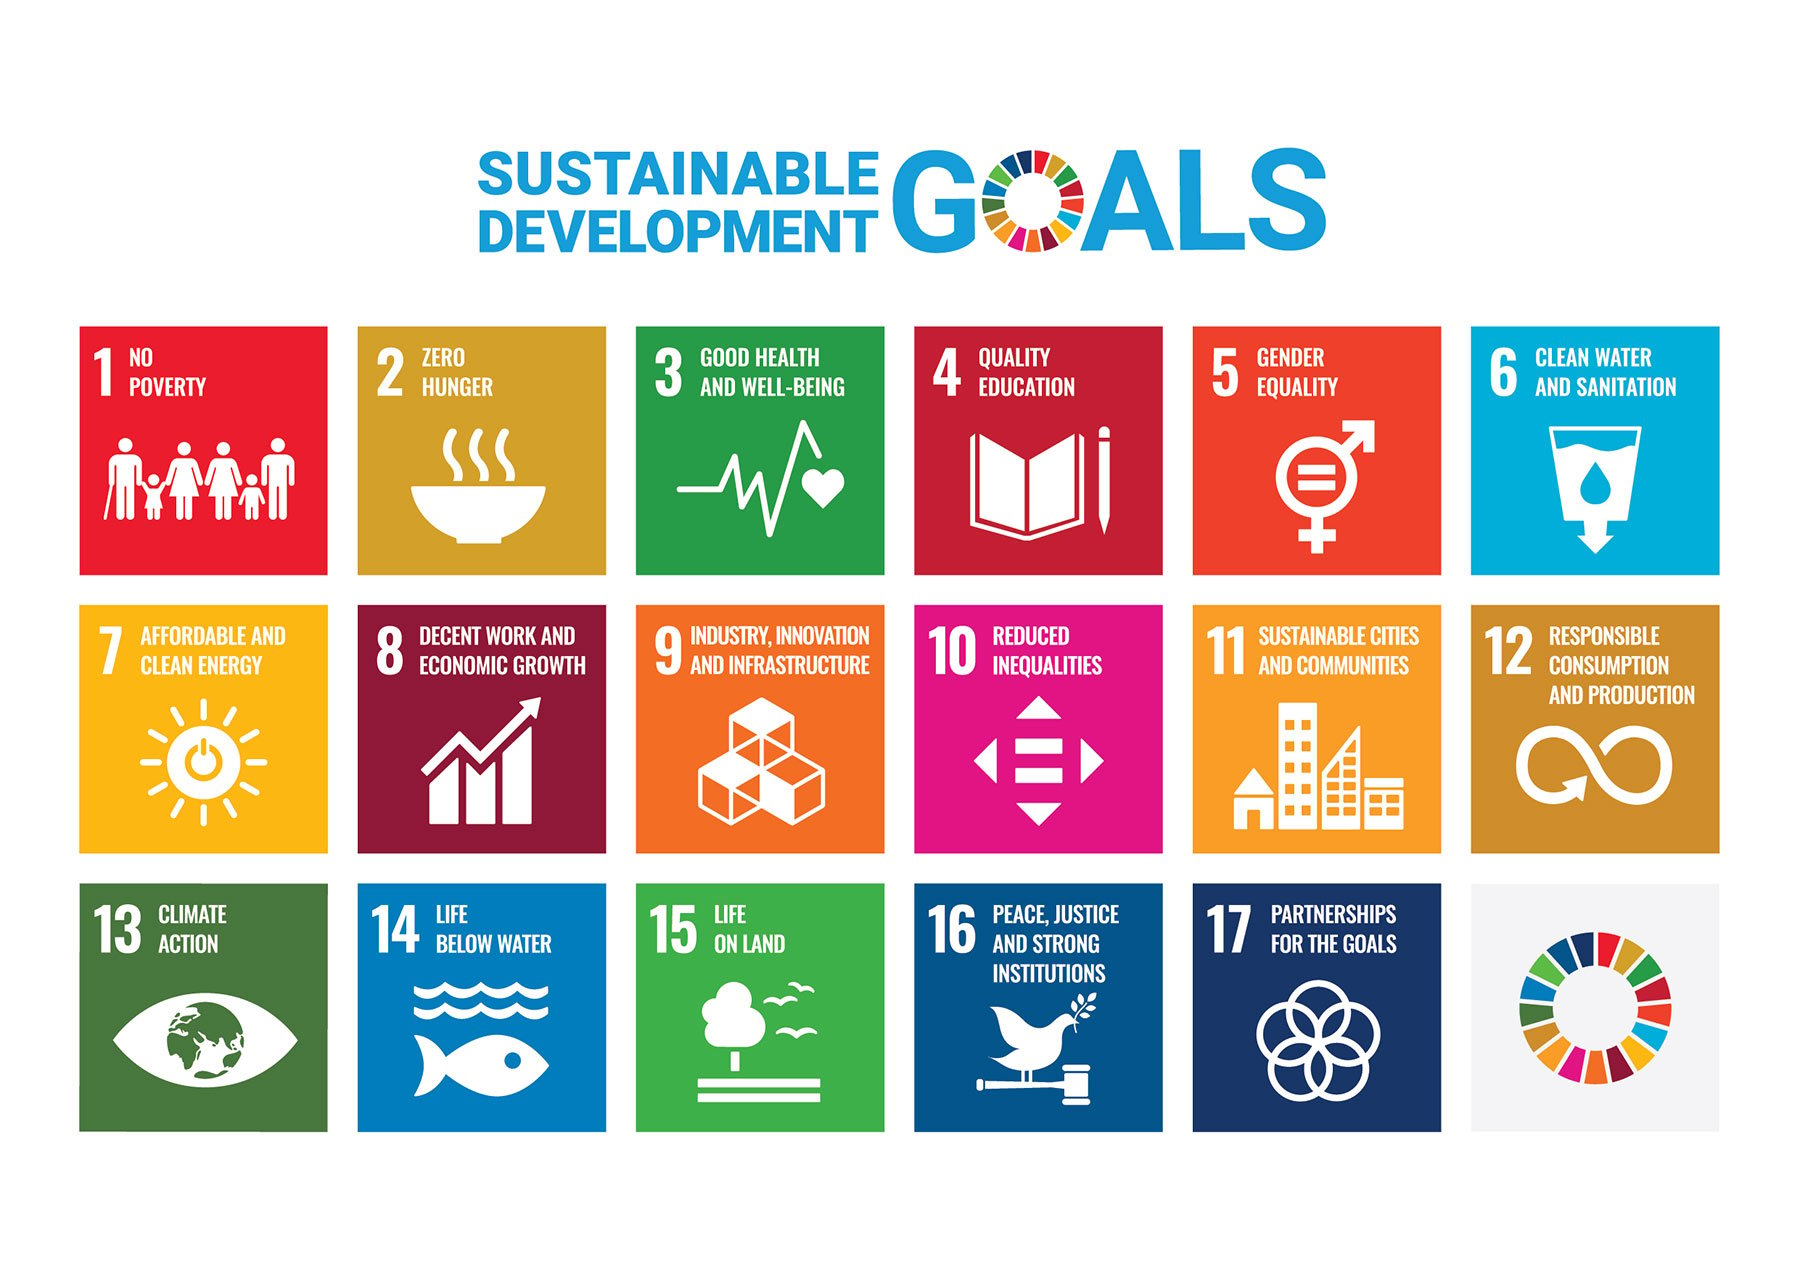 The UN sustainable development goals